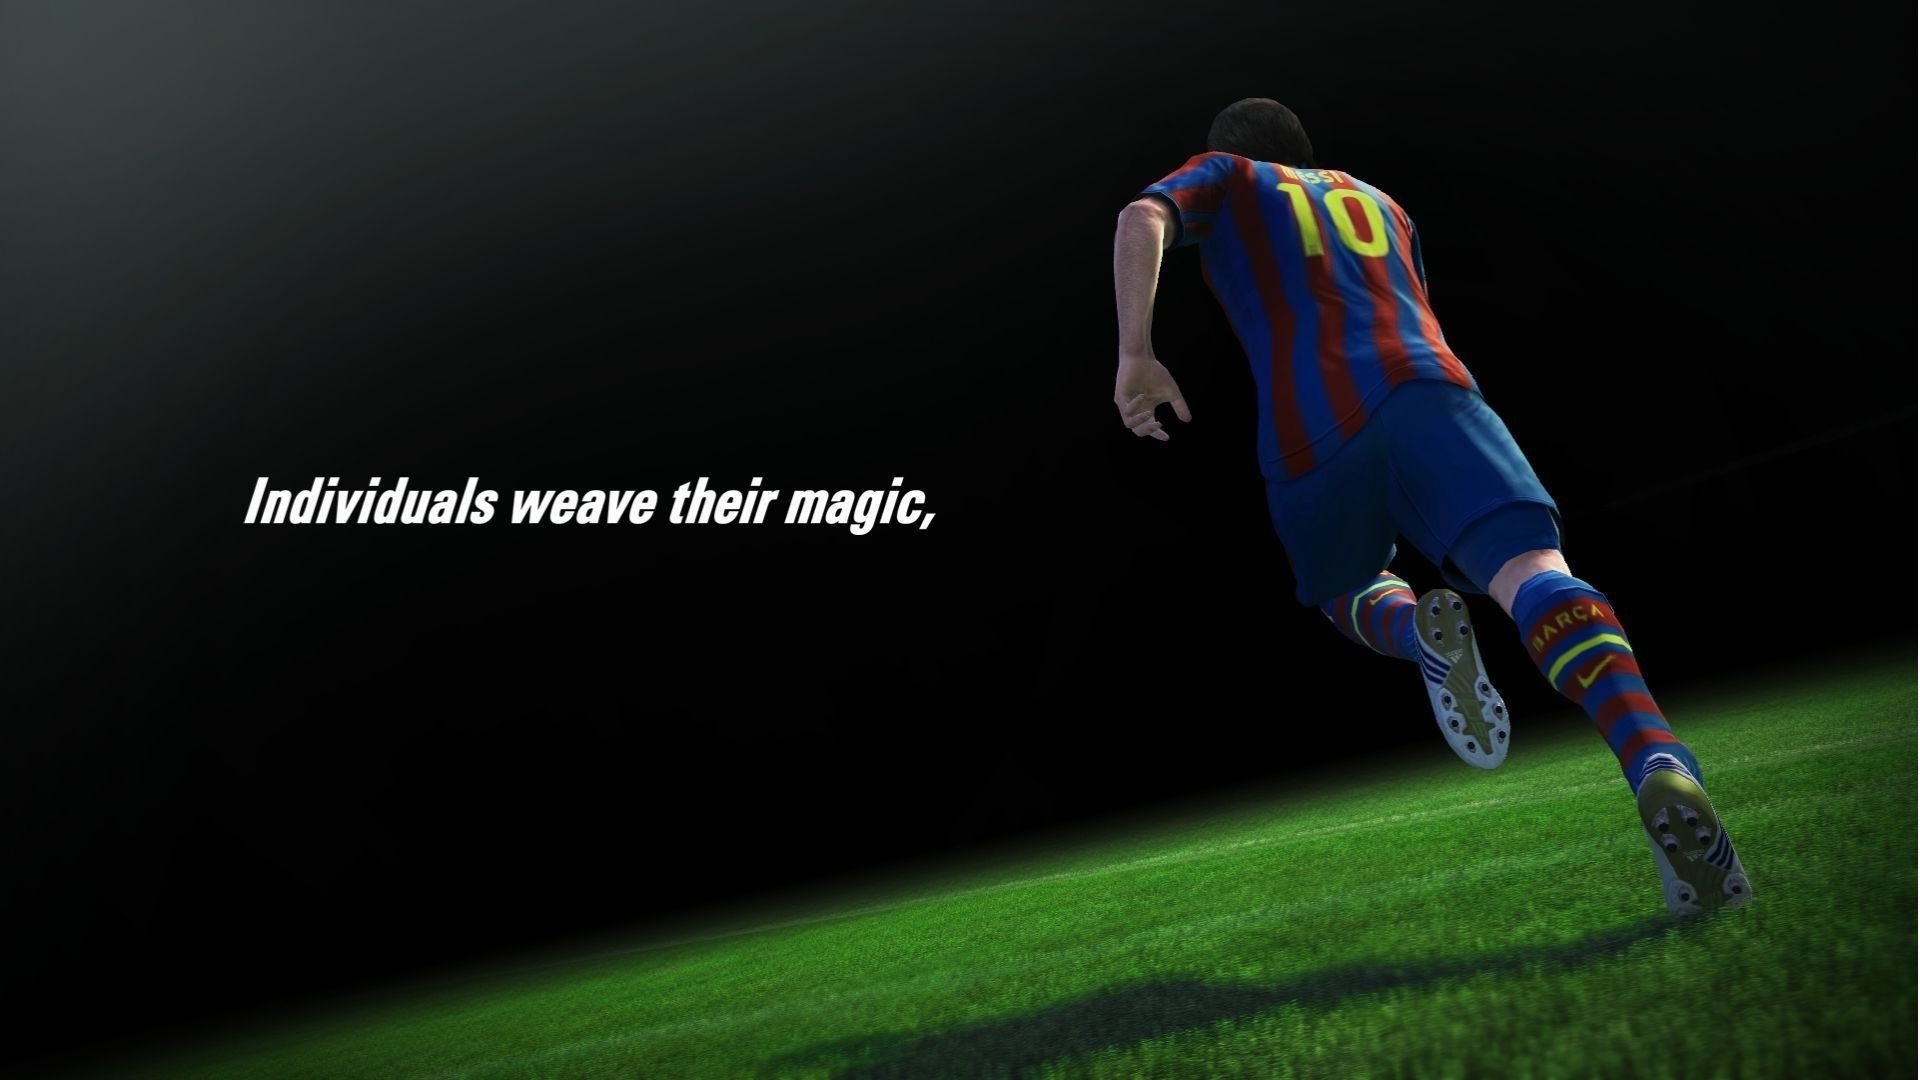 Individuals weave their magic, wallpaper background desktop soccer - Soccer